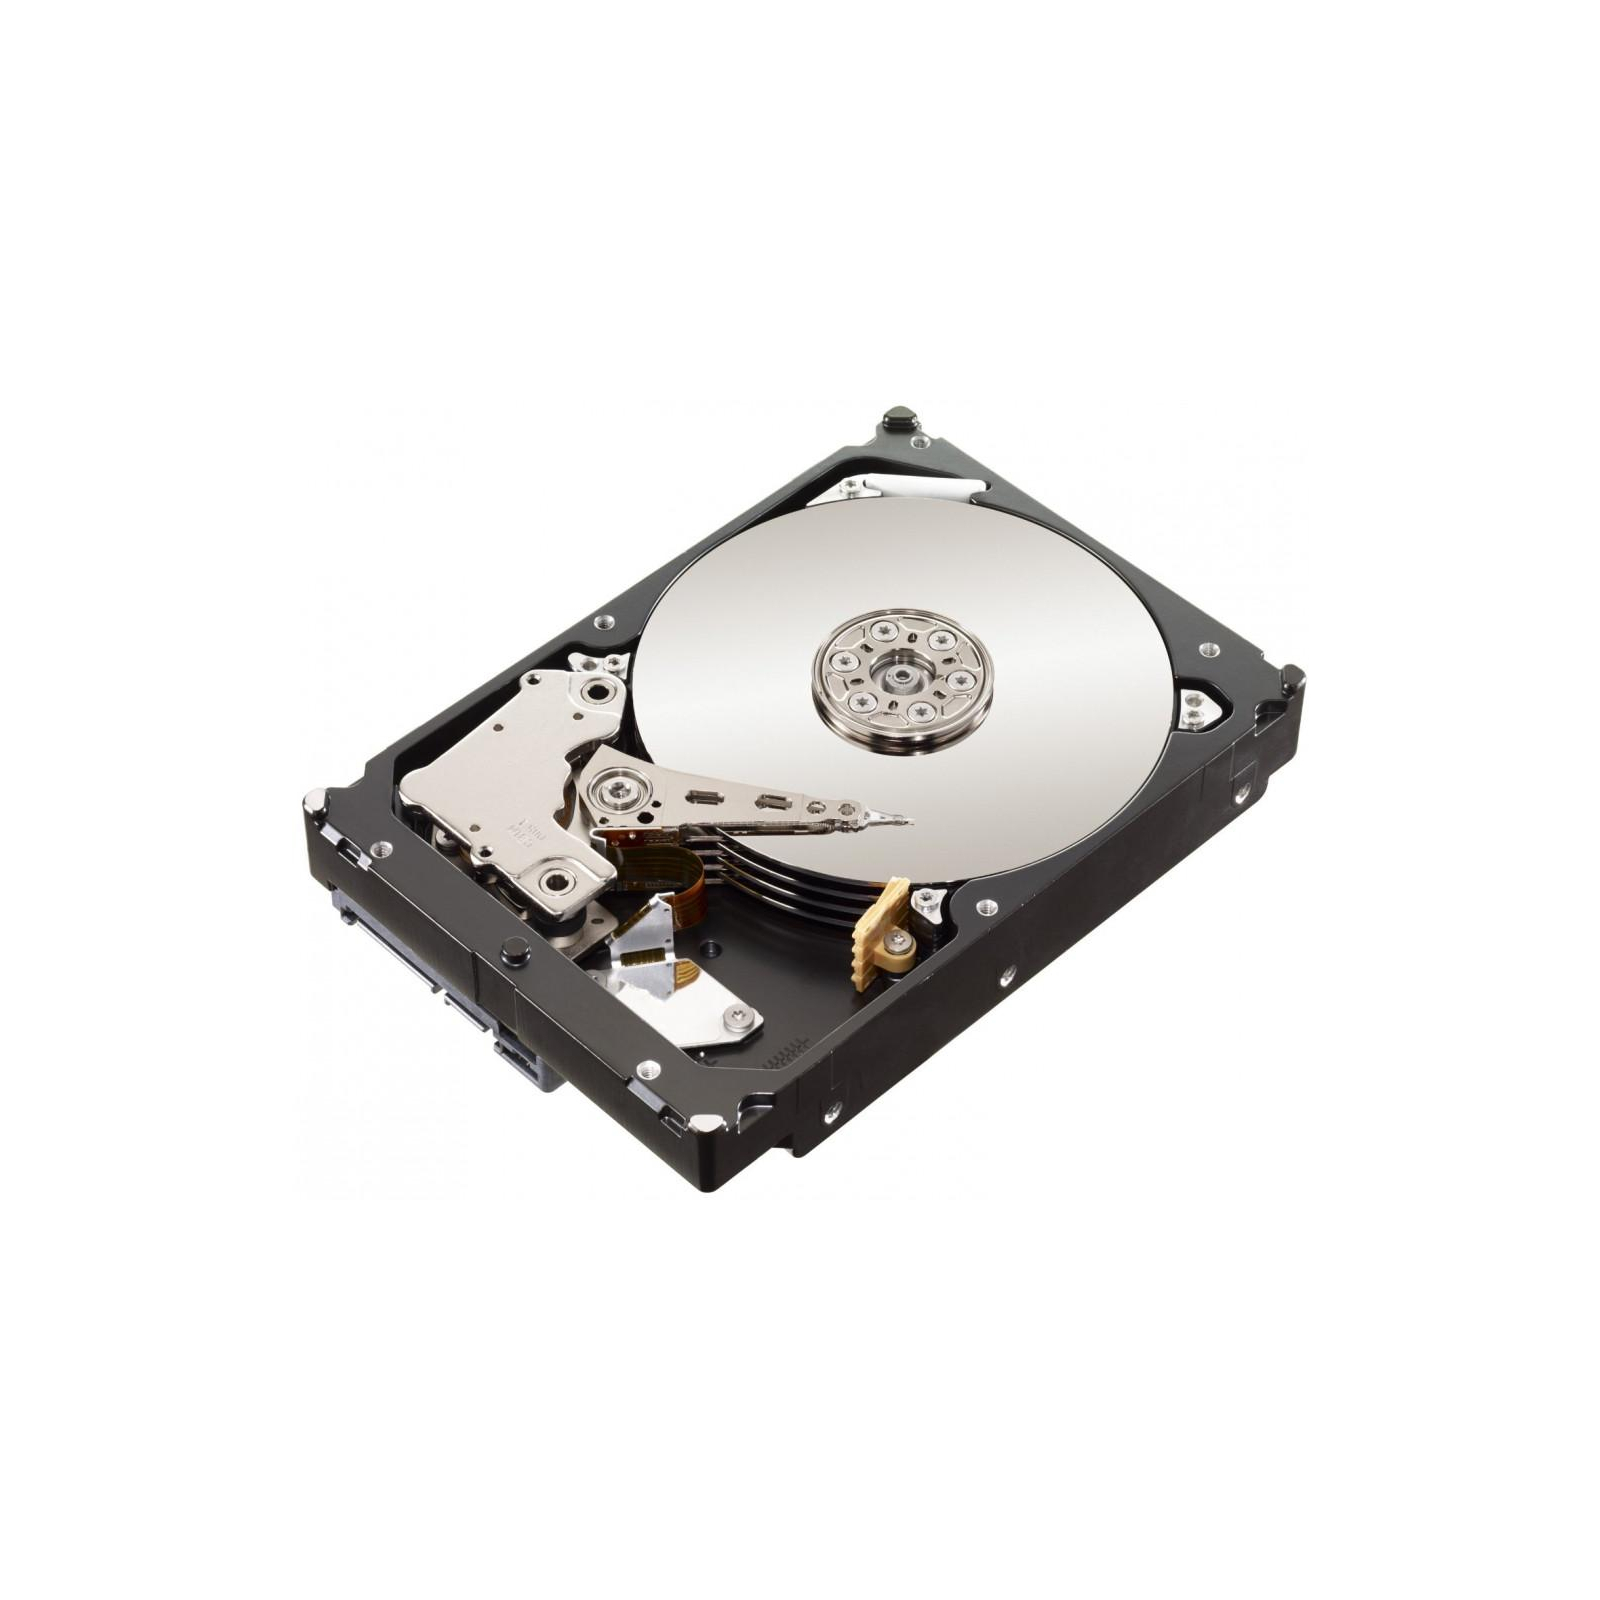 Жесткий диск для ноутбука 2.5" 500GB Seagate (#1KJ152-899 / ST500LM021-FR-WL#)